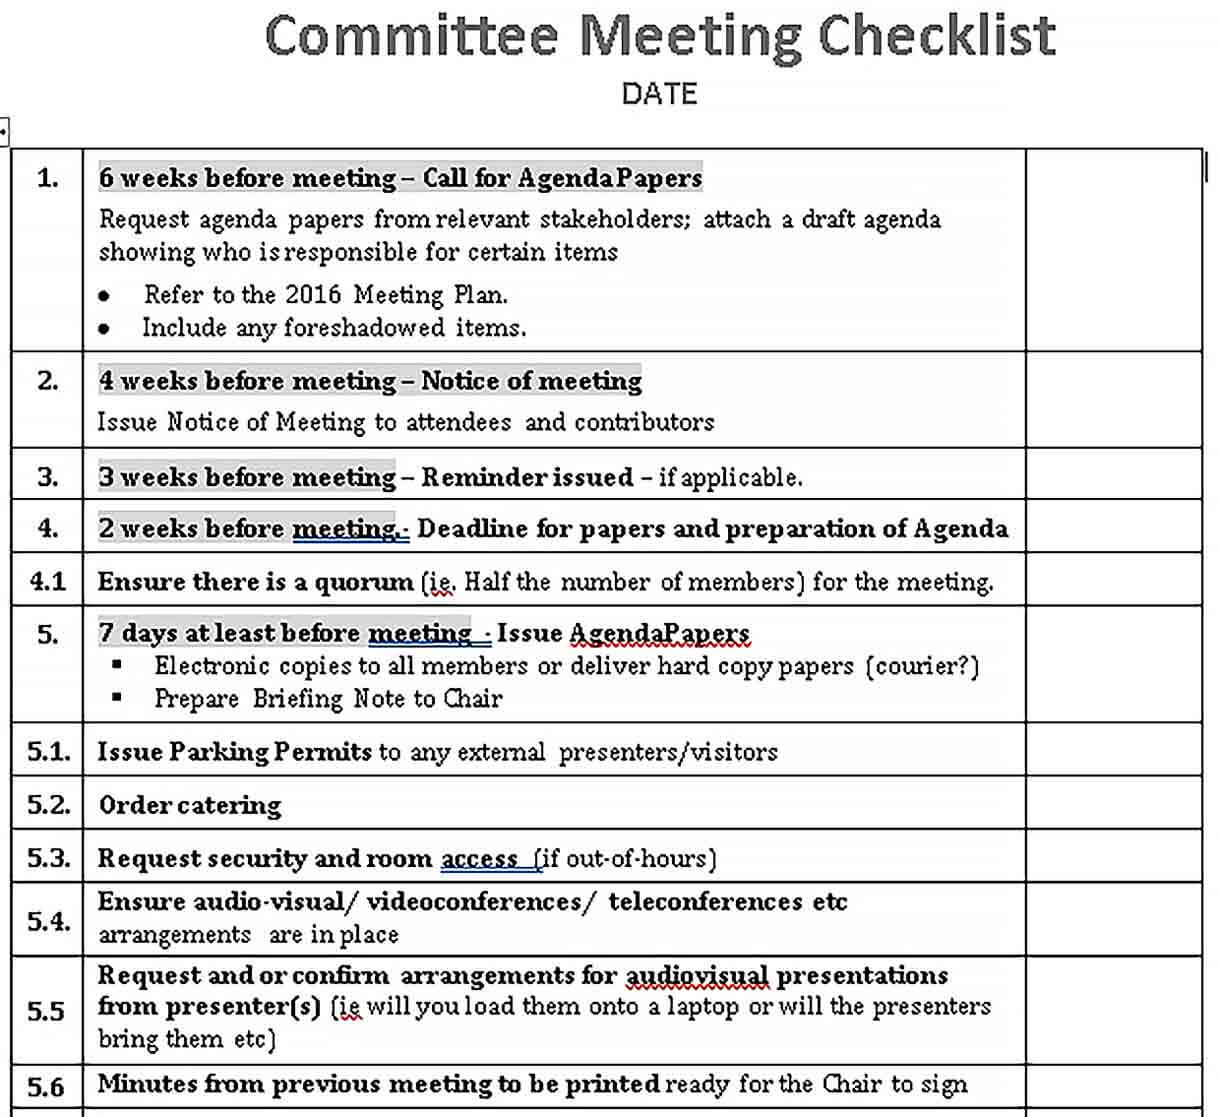 Sample Committee Meeting Checklist